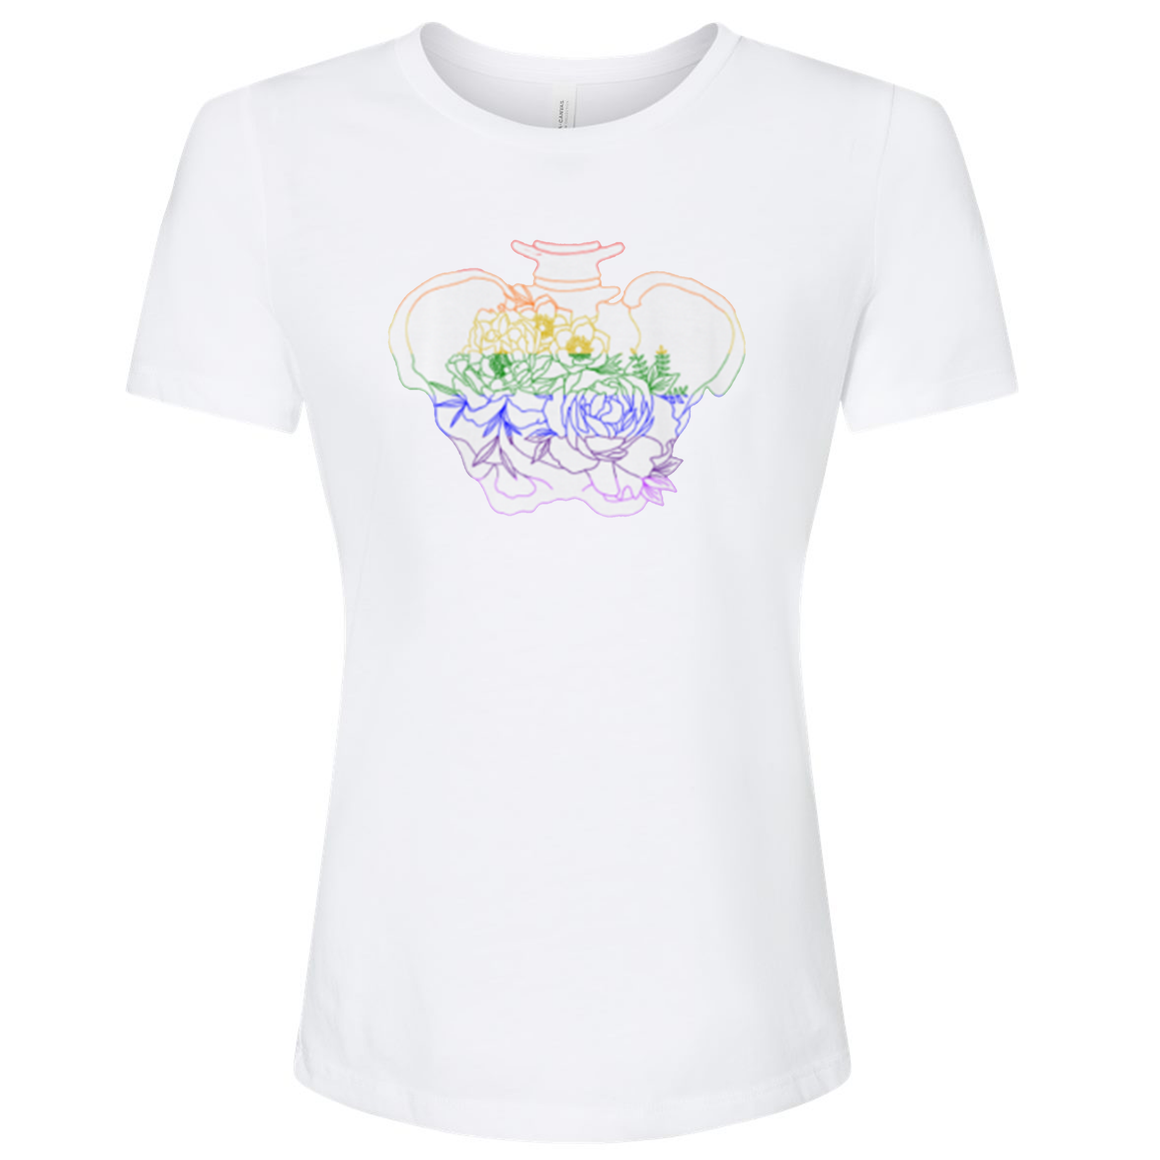 Women's Relaxed Fit Pelvic Pride Short Sleeve Rainbow Shirt